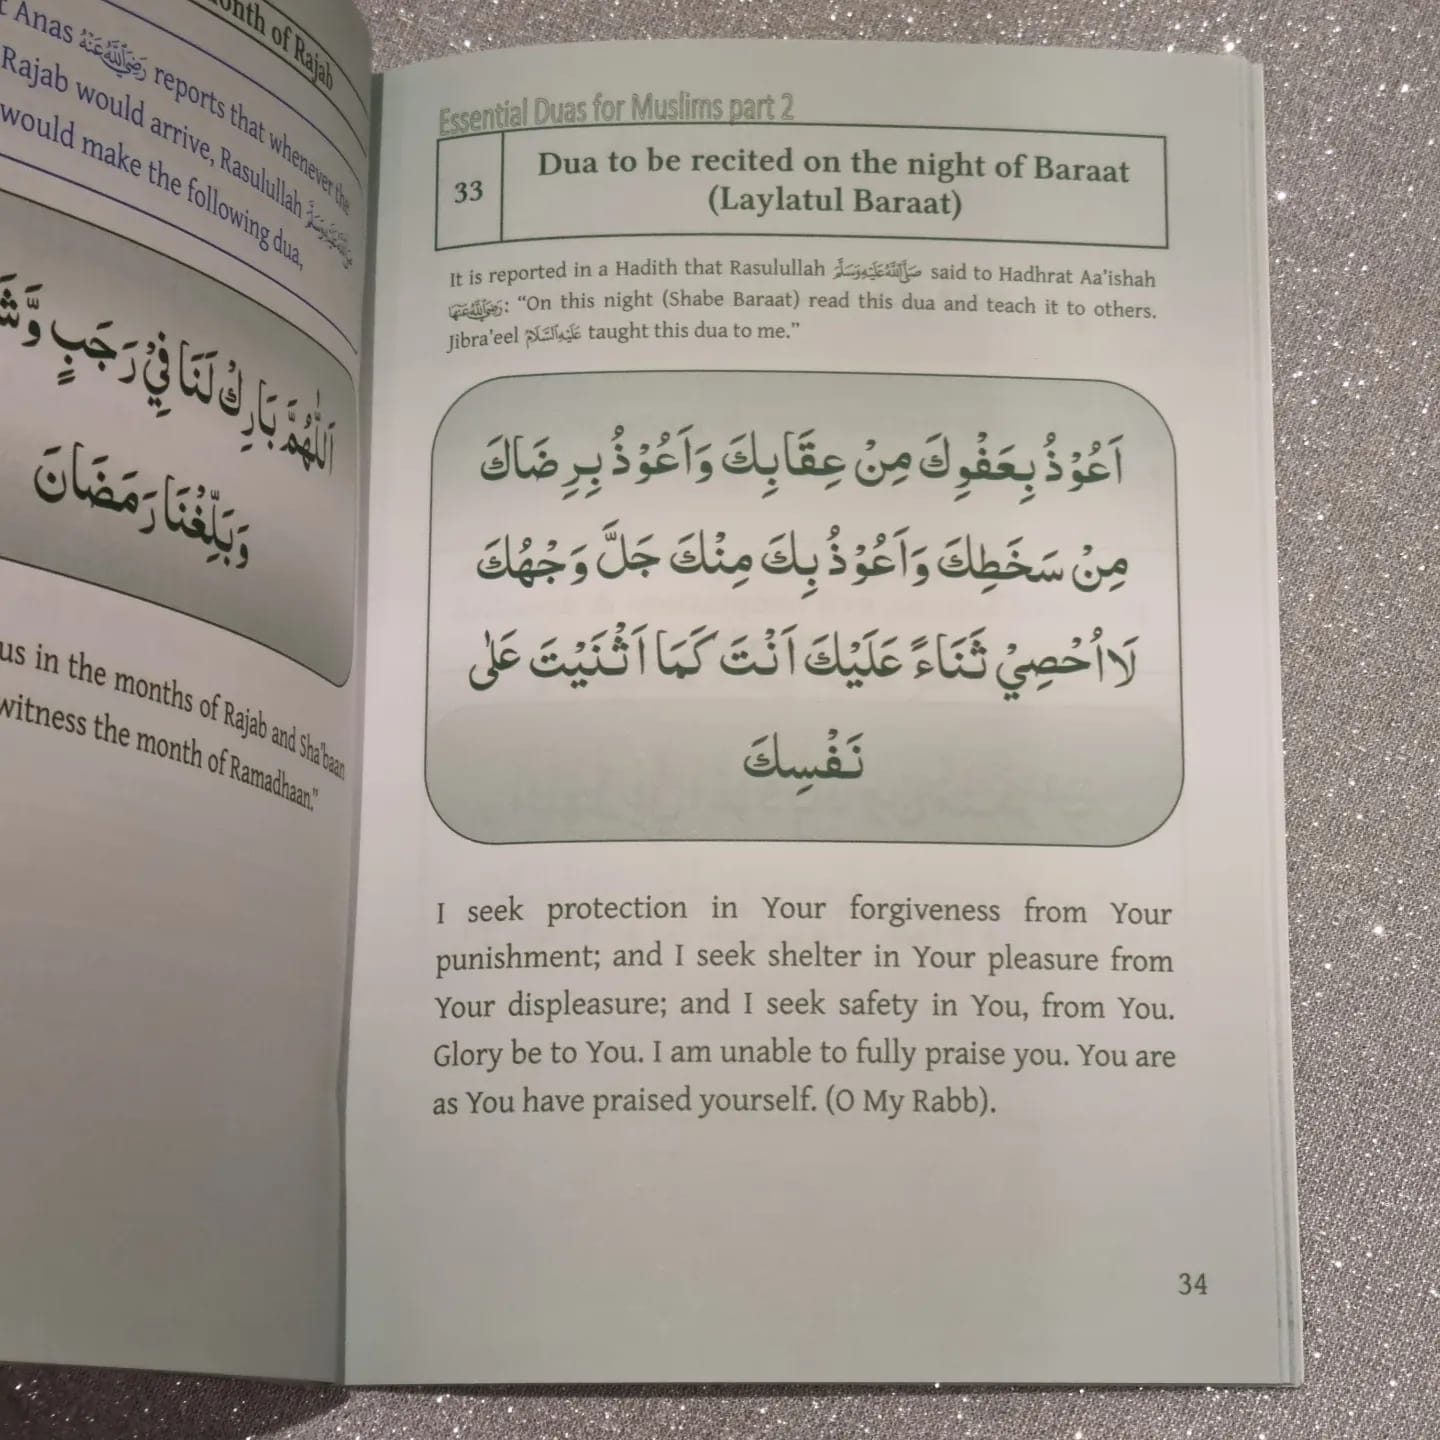 Essential Duas for Muslims - Part 2